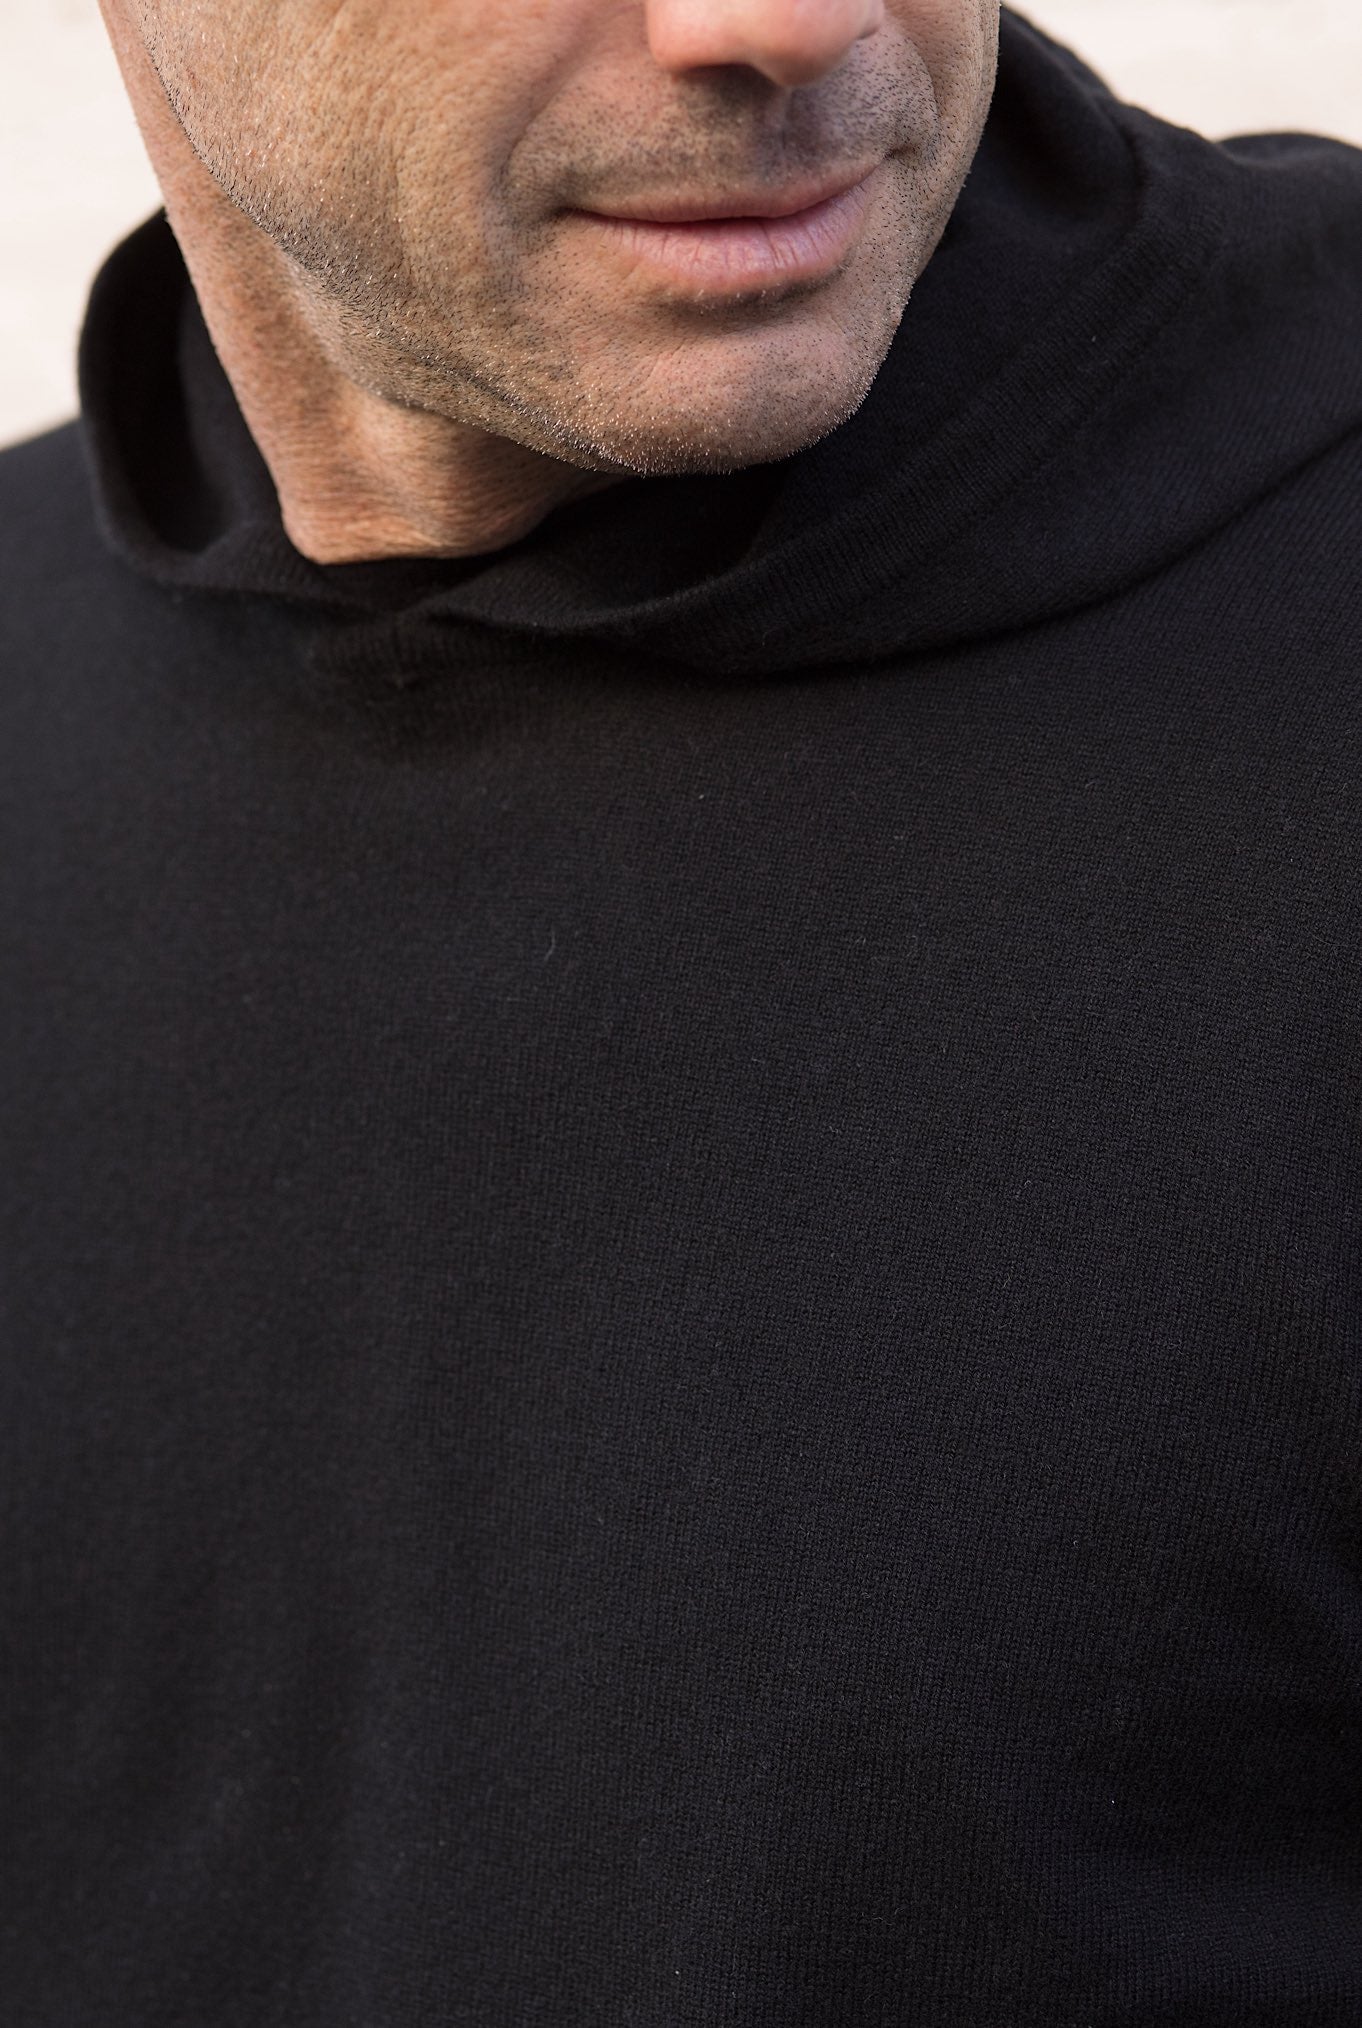 GUARINO Cashmere Sweatshirt with Black Hood